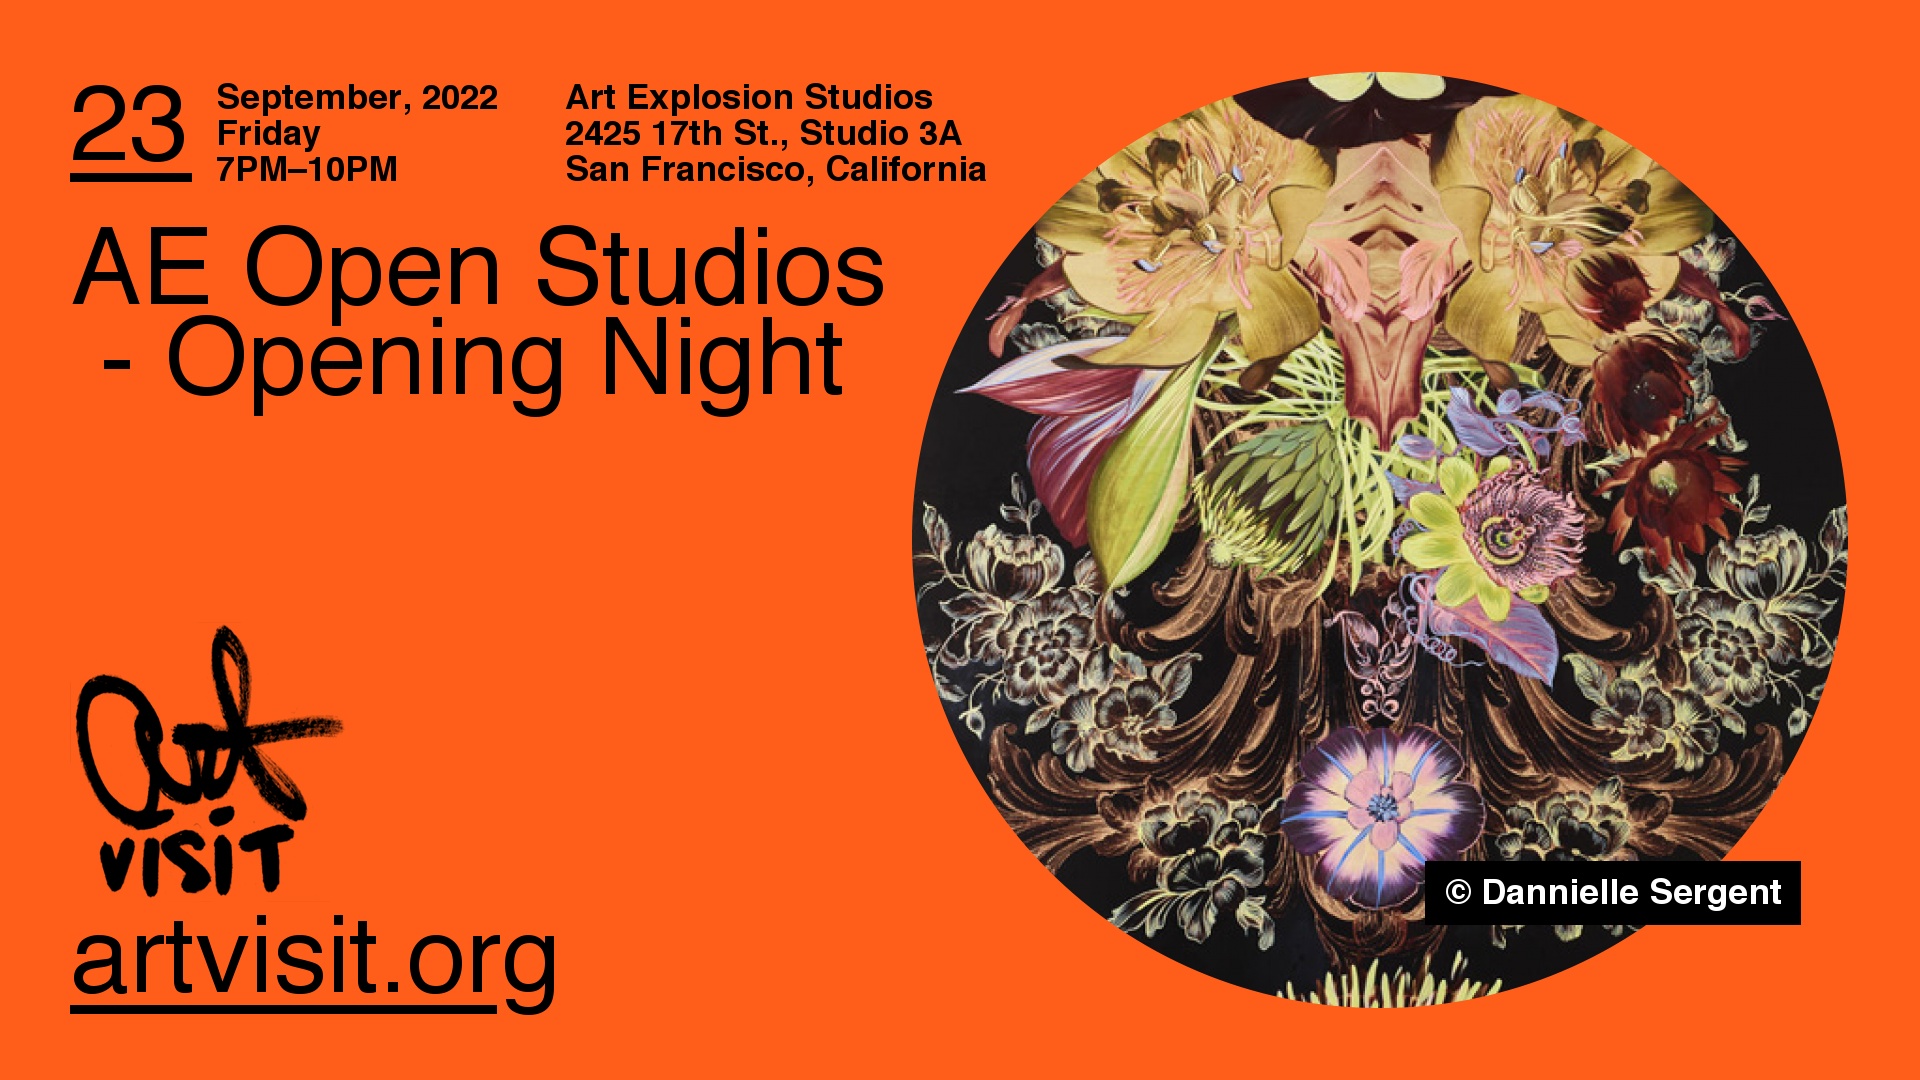 AE Open Studios - Opening Night